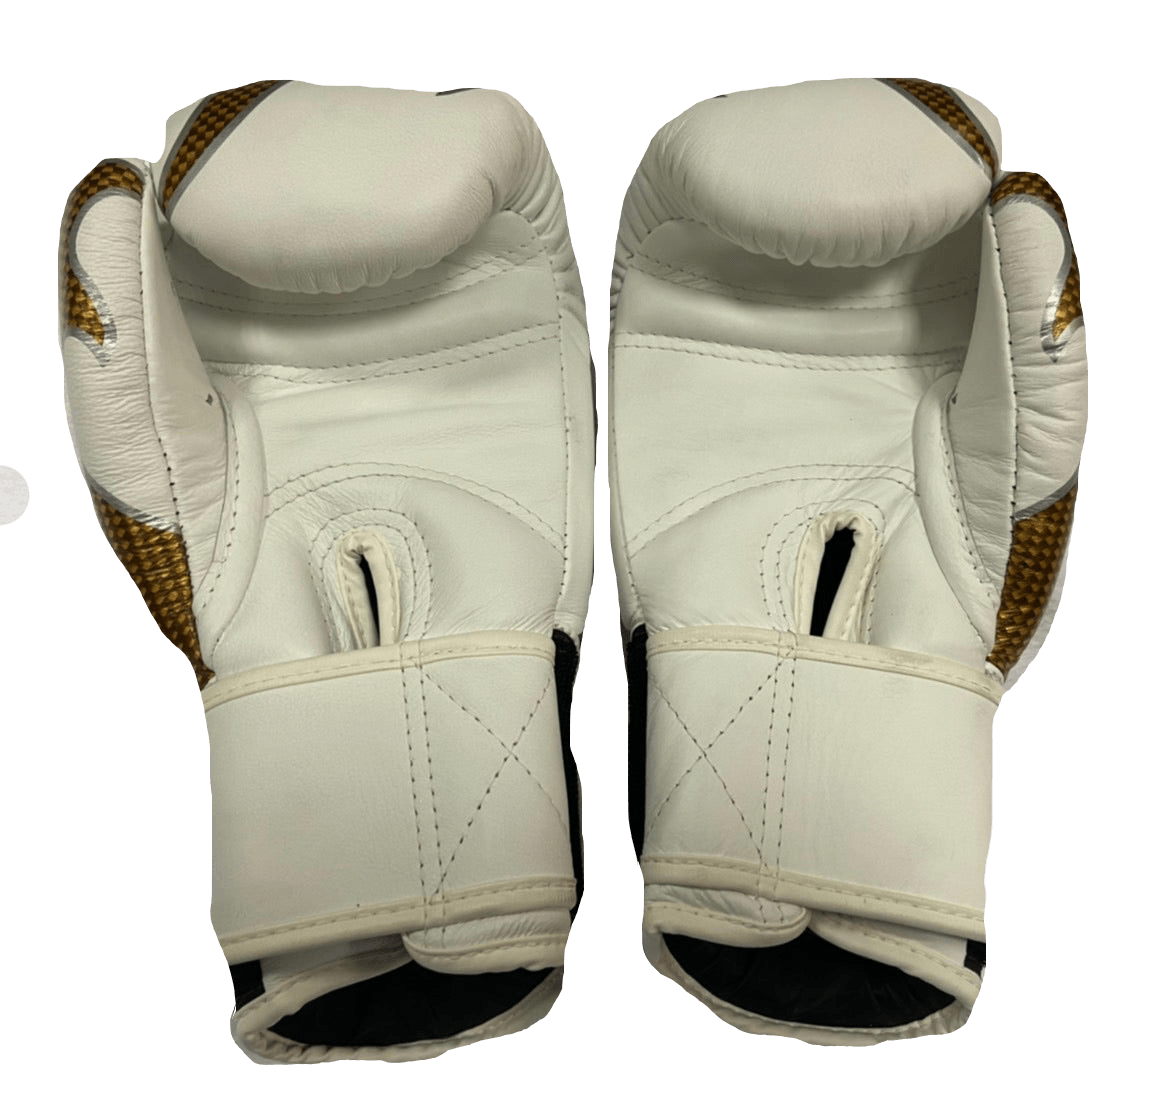 Top King Boxing Gloves "Empower" NO AIR TKBGEM-01 White(Gold)